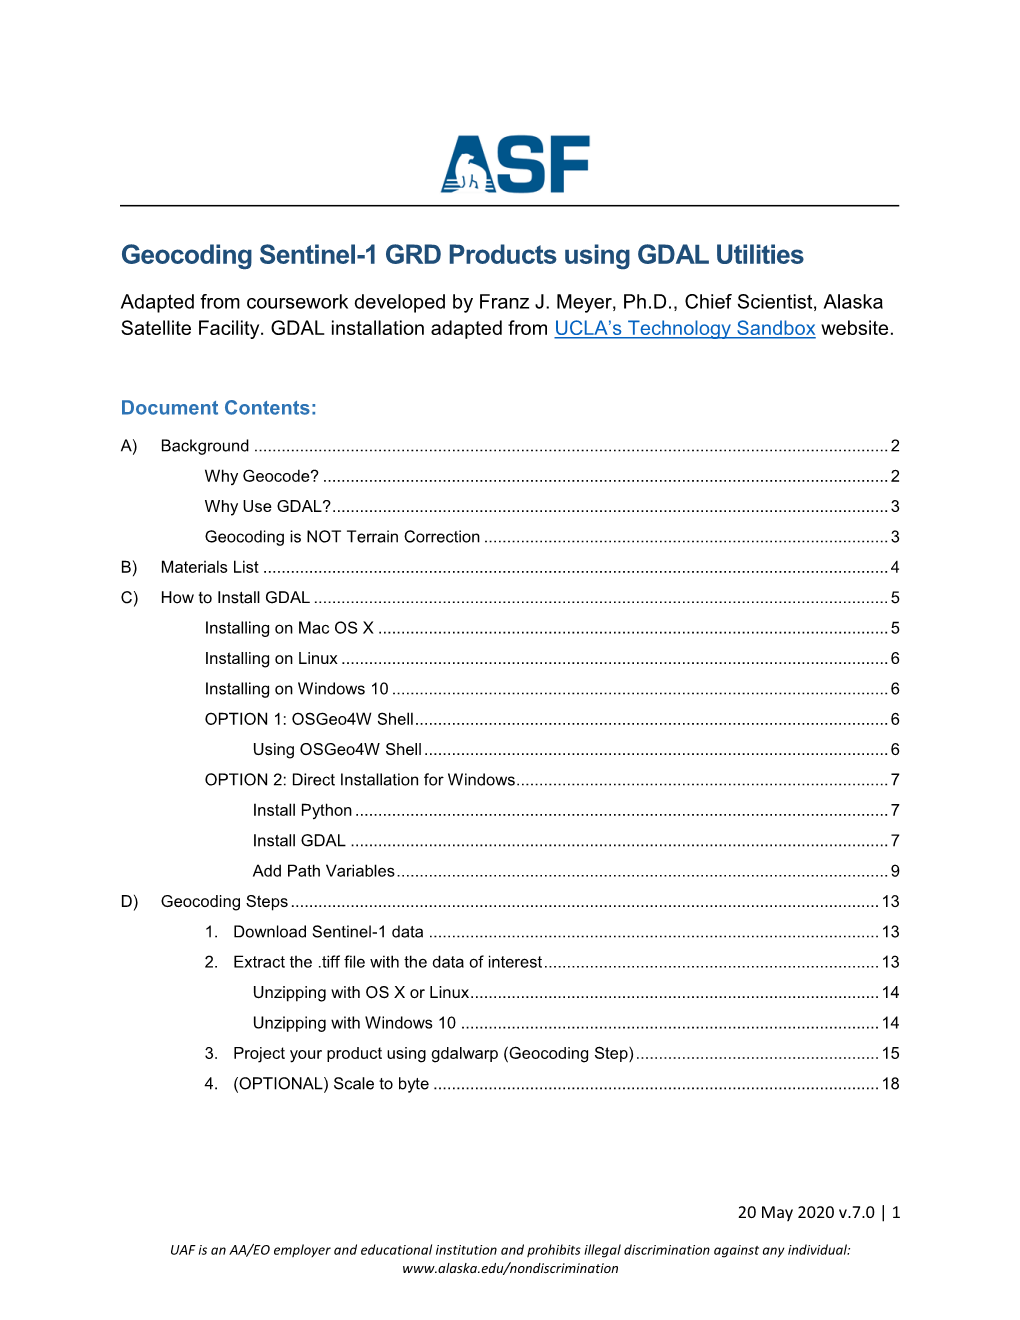 Geocoding Sentinel-1 GRD Products Using GDAL Utilities